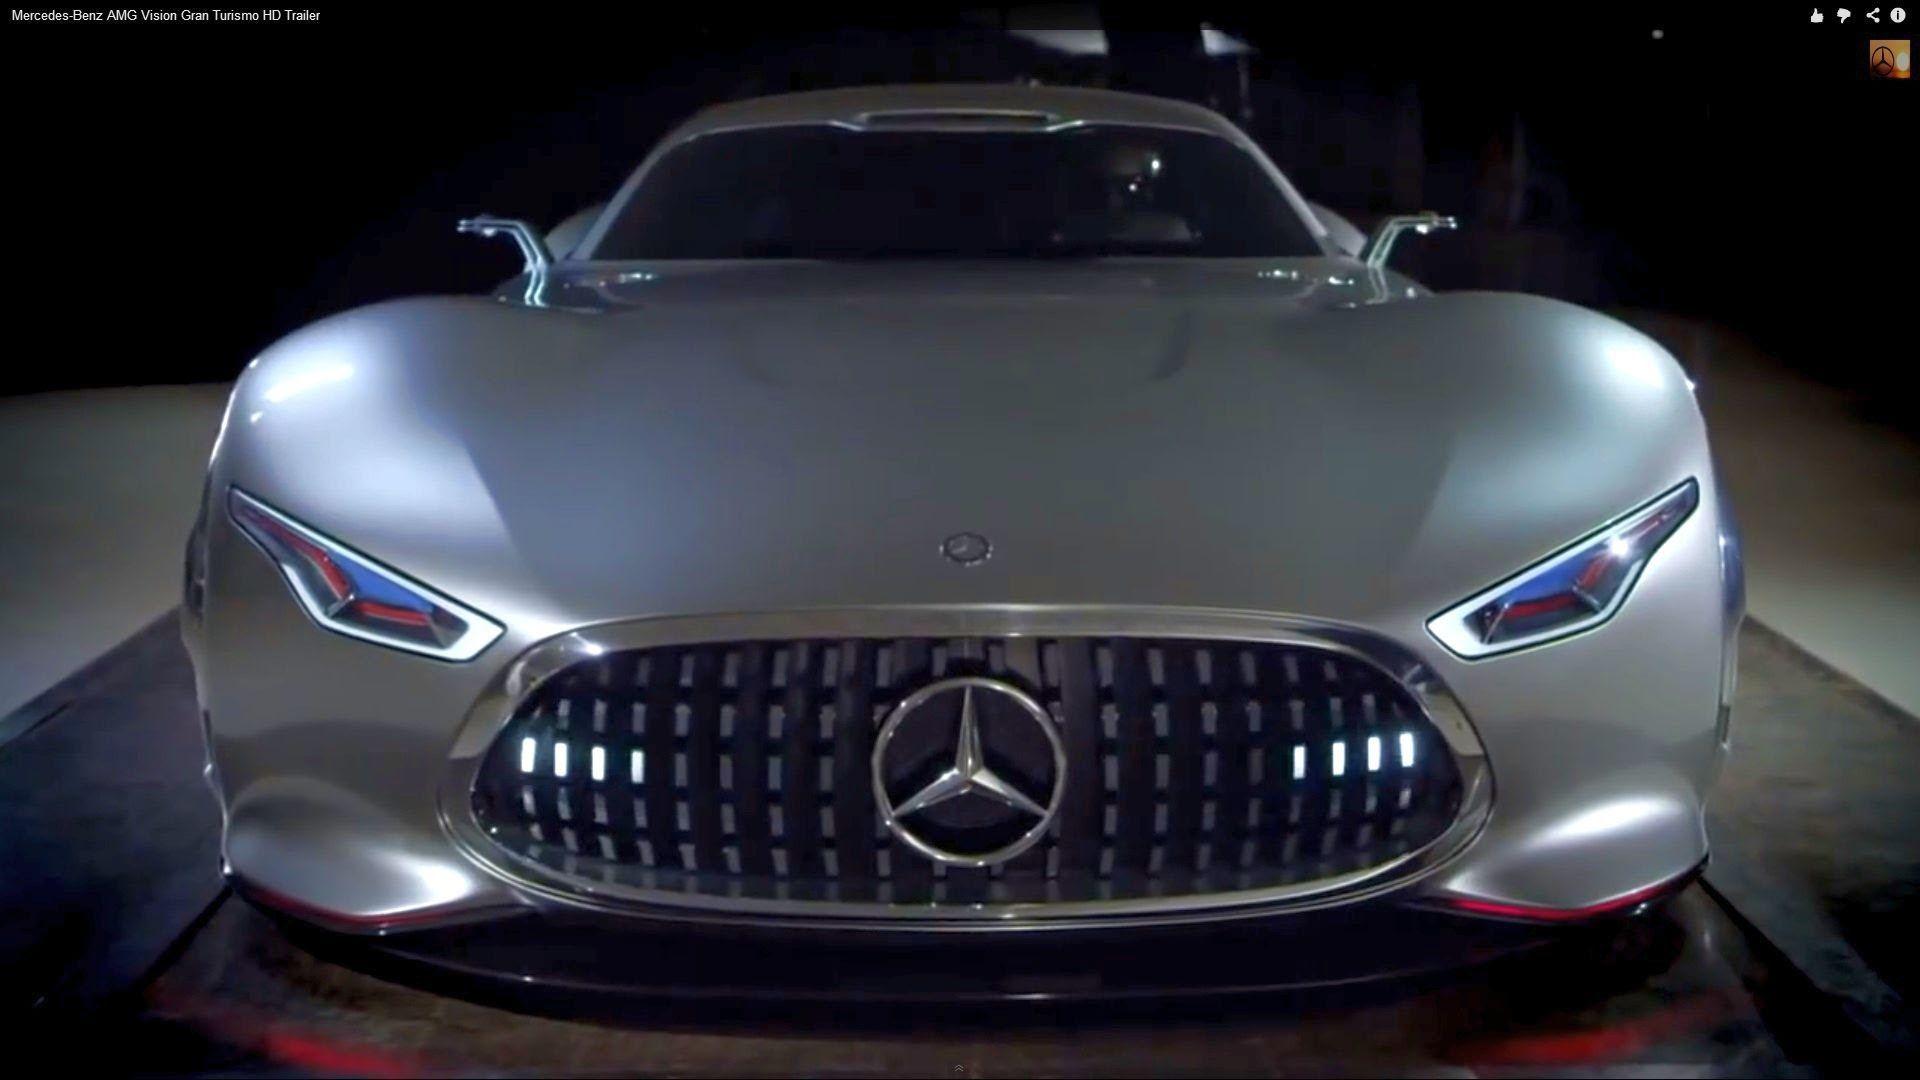 Mercedes Benz AMG Vision Gran Turismo HD Trailer